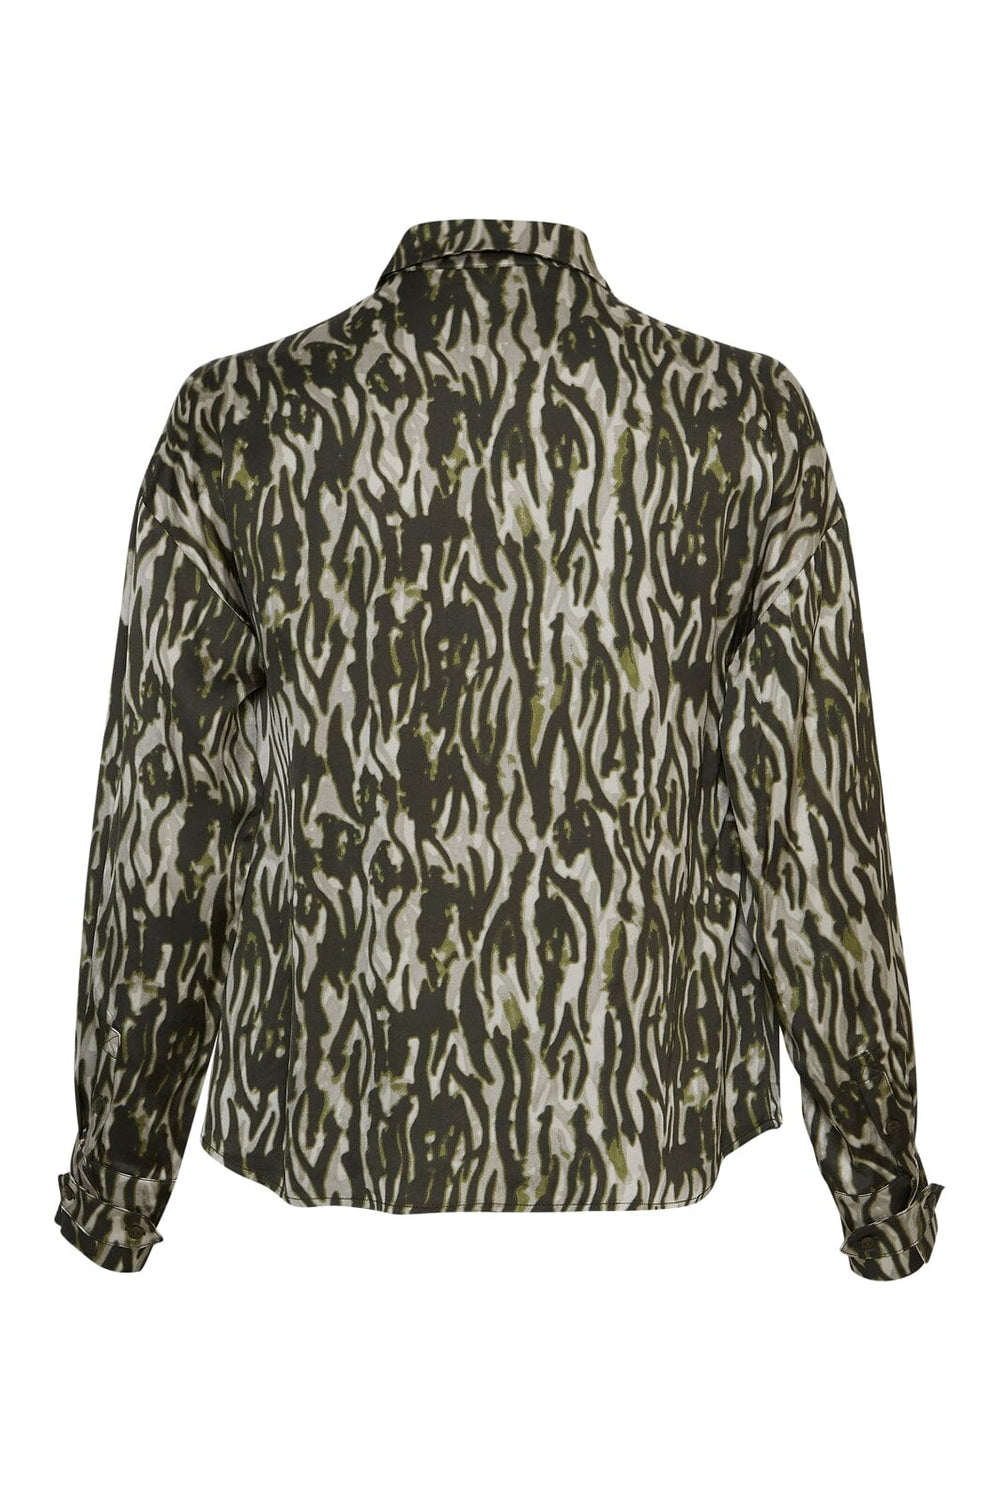 Moss Copenhagen - Mschjoceline Irida Shirt - Blk Sand Zebra Skjorter 